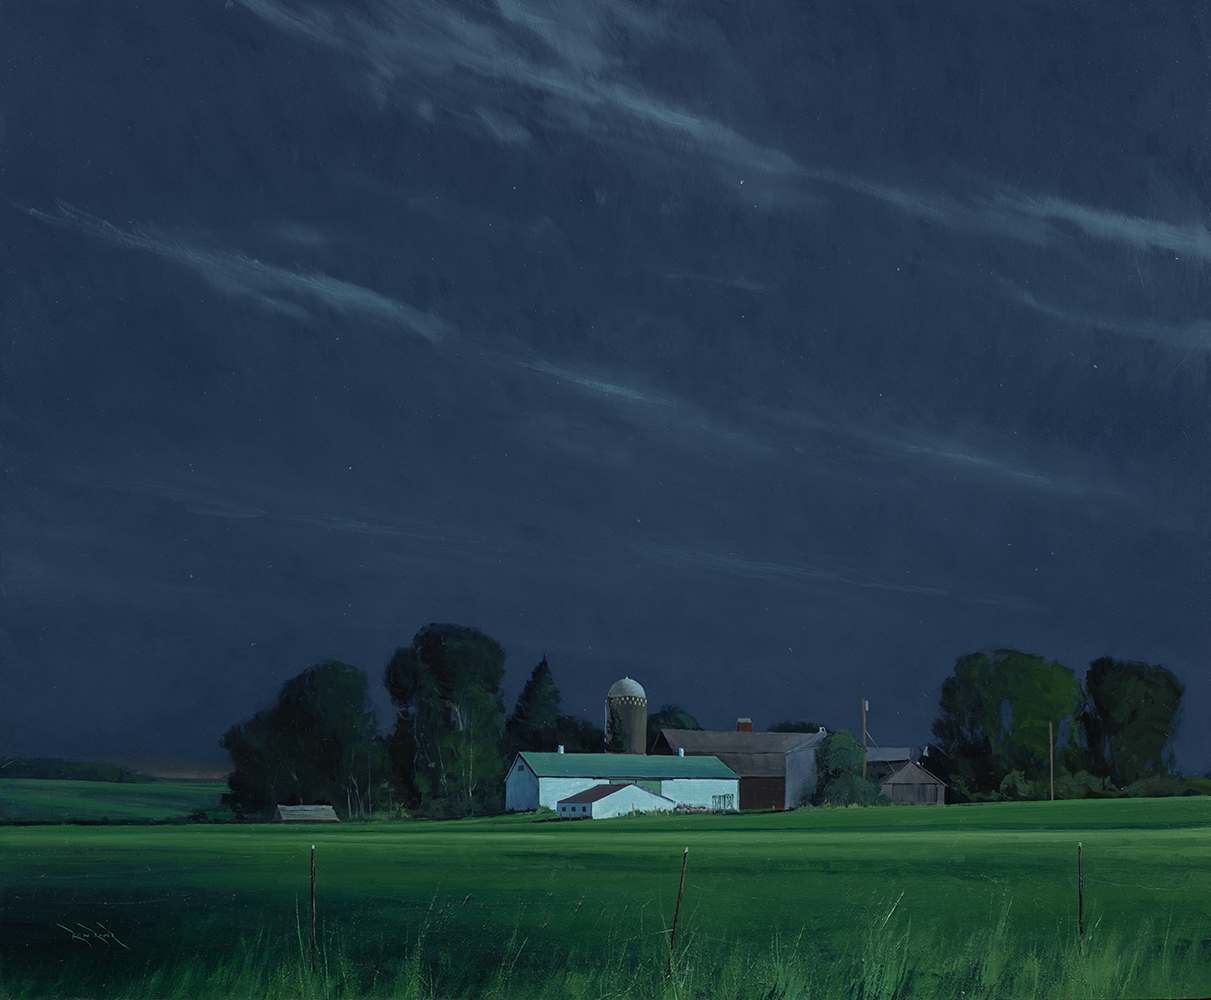 ben_bauer_bb1102_st_croix_county_farm_by_moonlight.jpg